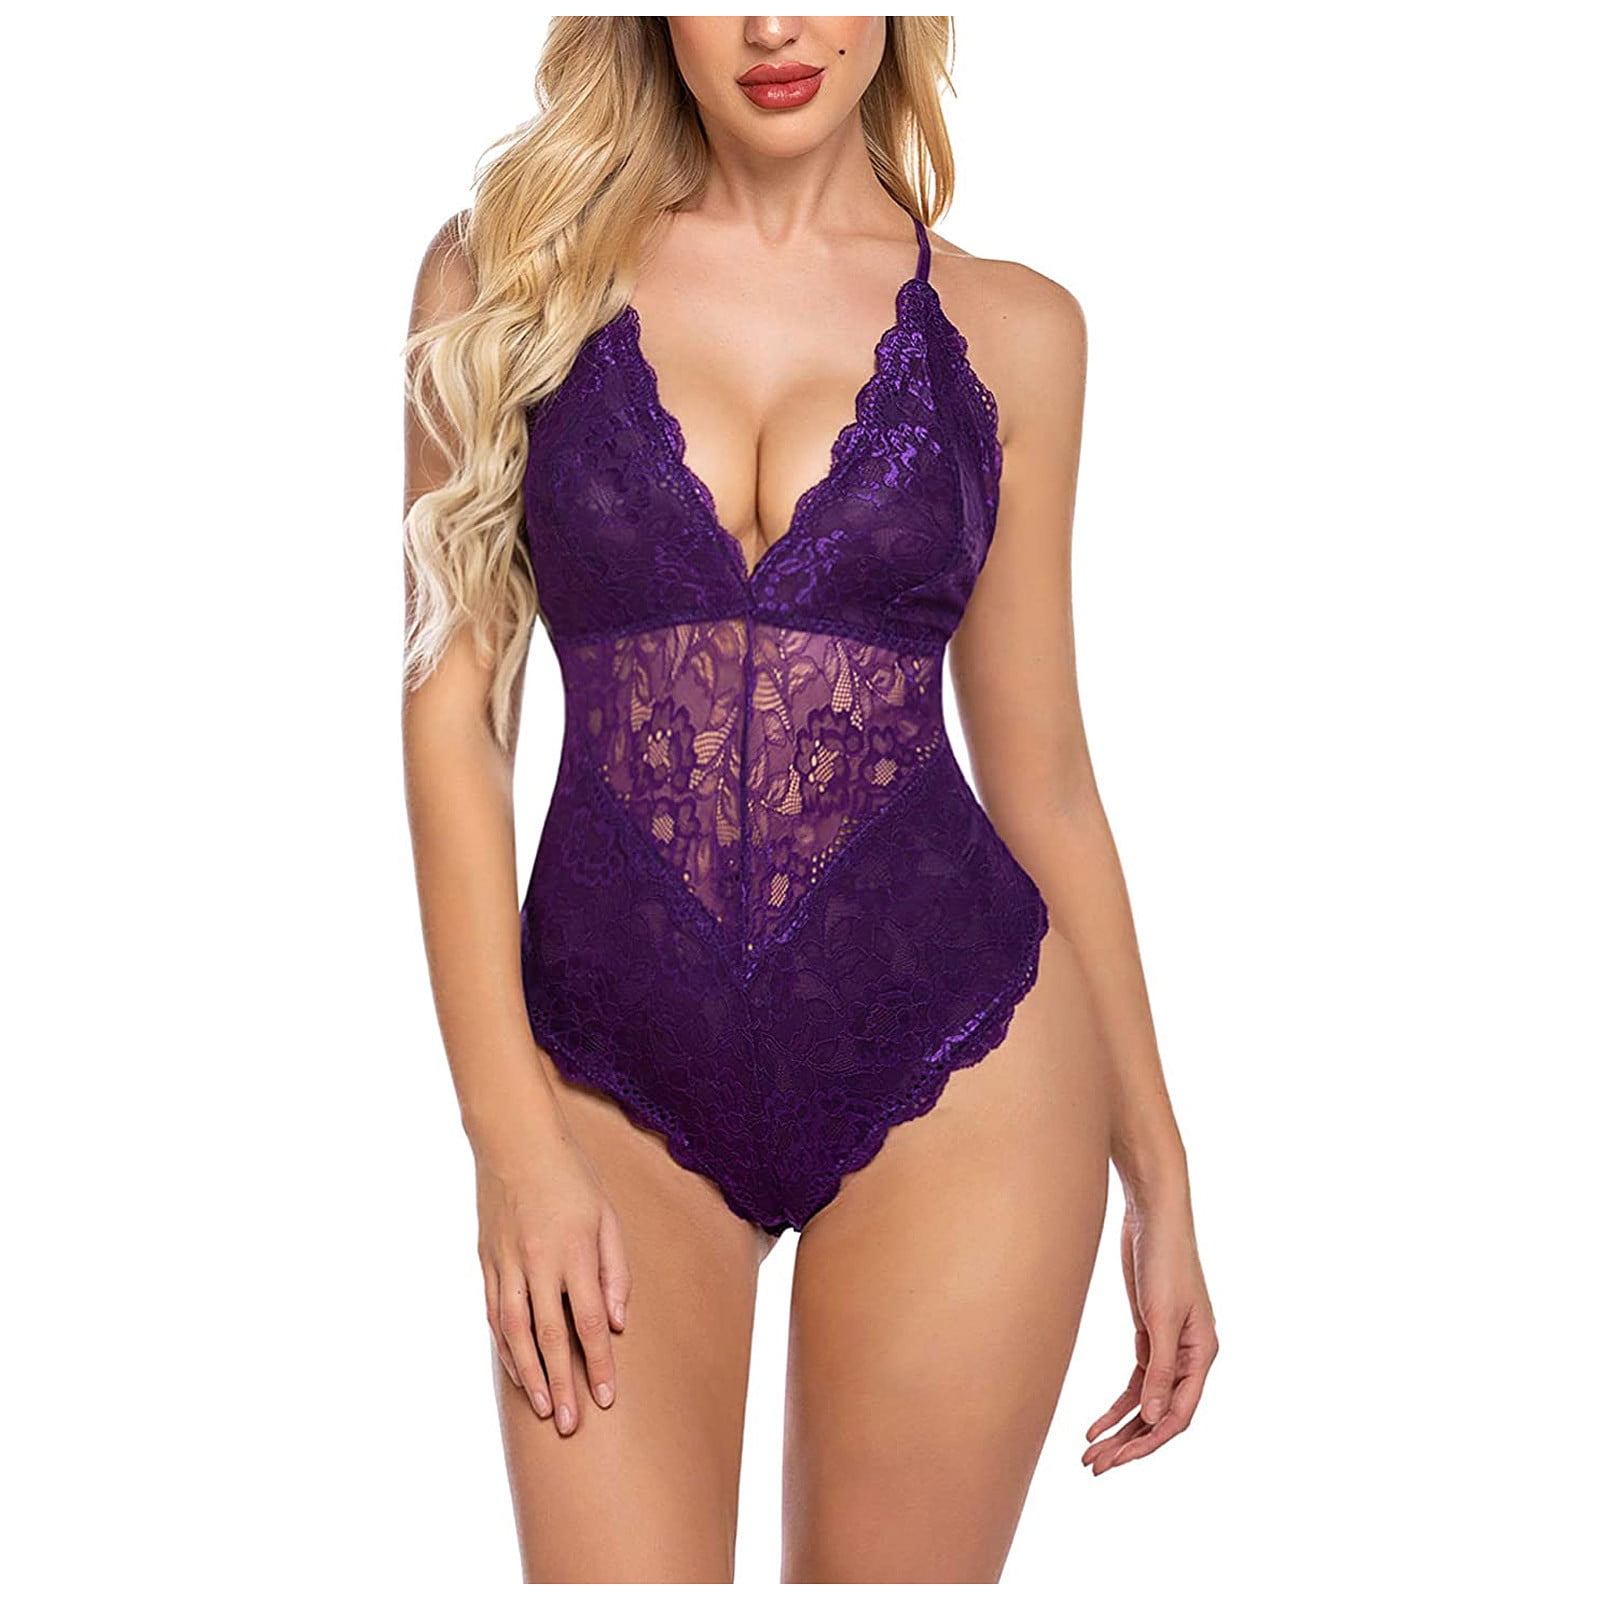 SKMODEL STYLISH Women Hot & Sexy Lingerie Lace Bra Top Mini Sets Nightwear  Dress BabyDoll(Purple,Xl)